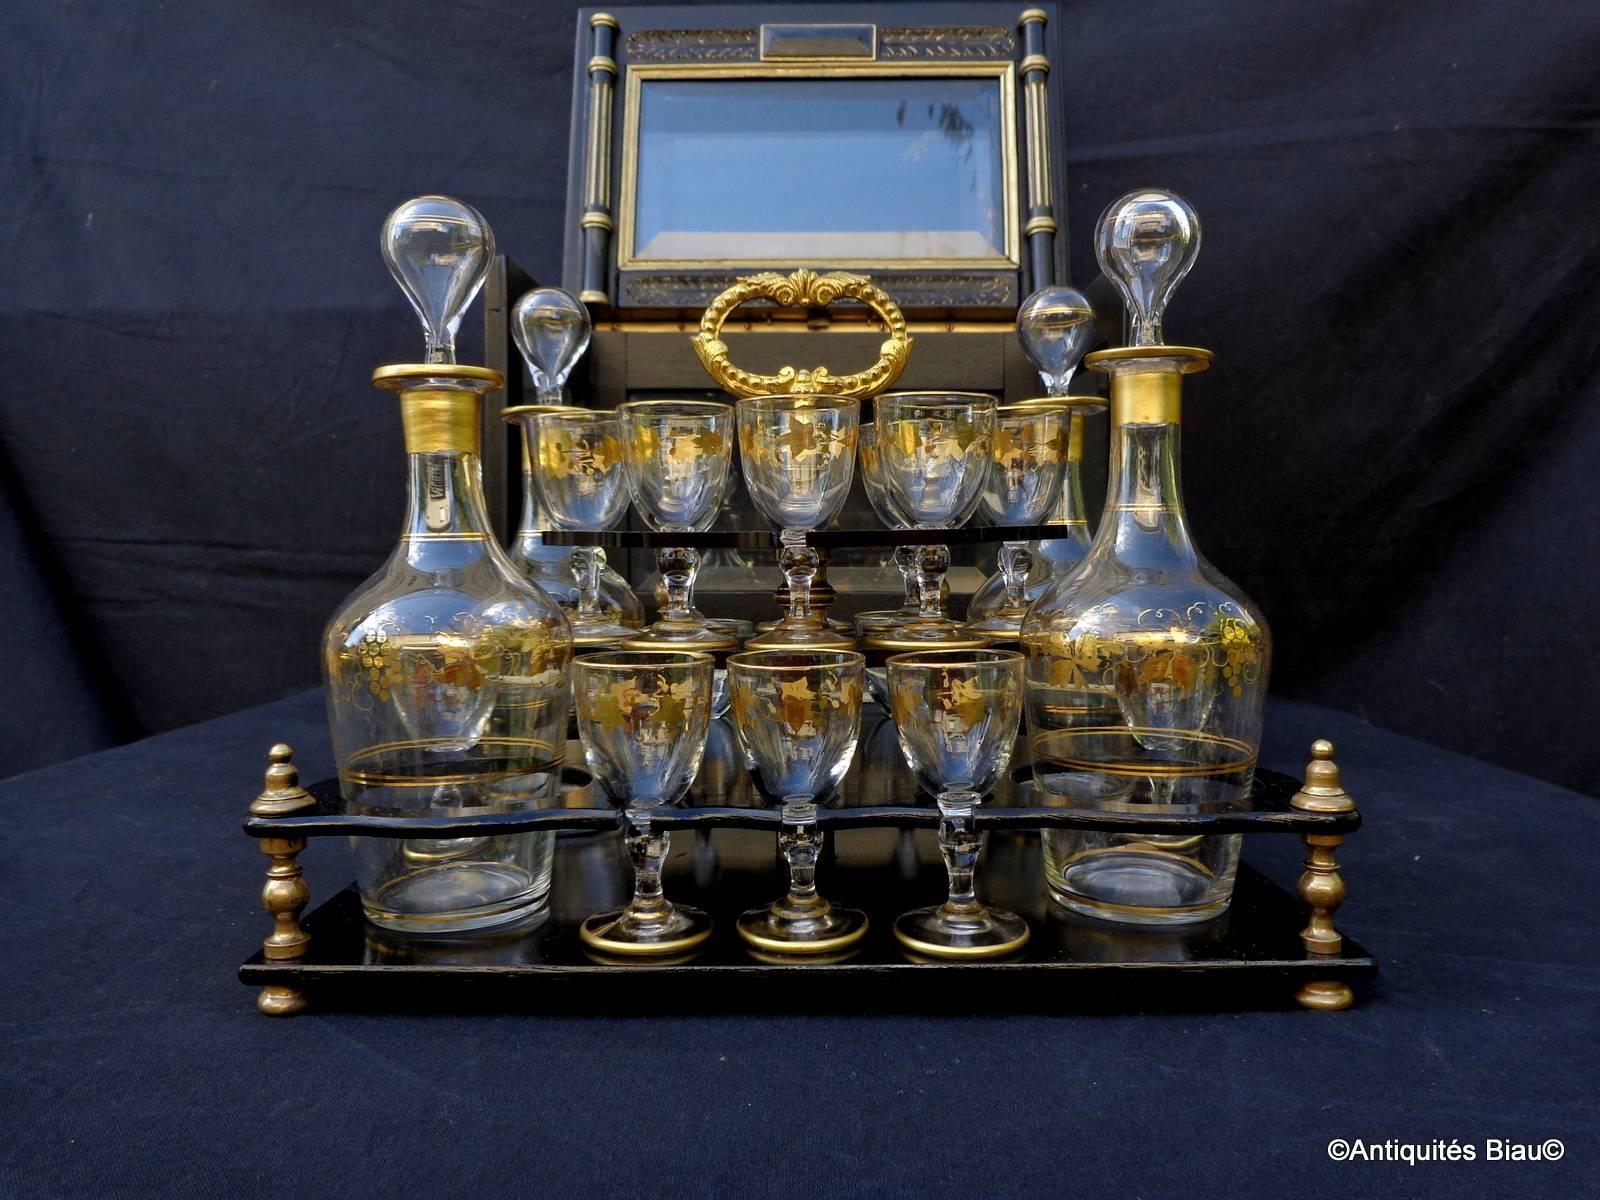 Tantalus Liquor Box with Glasses in Black and Gold, 19th Century, Napoleon III 4